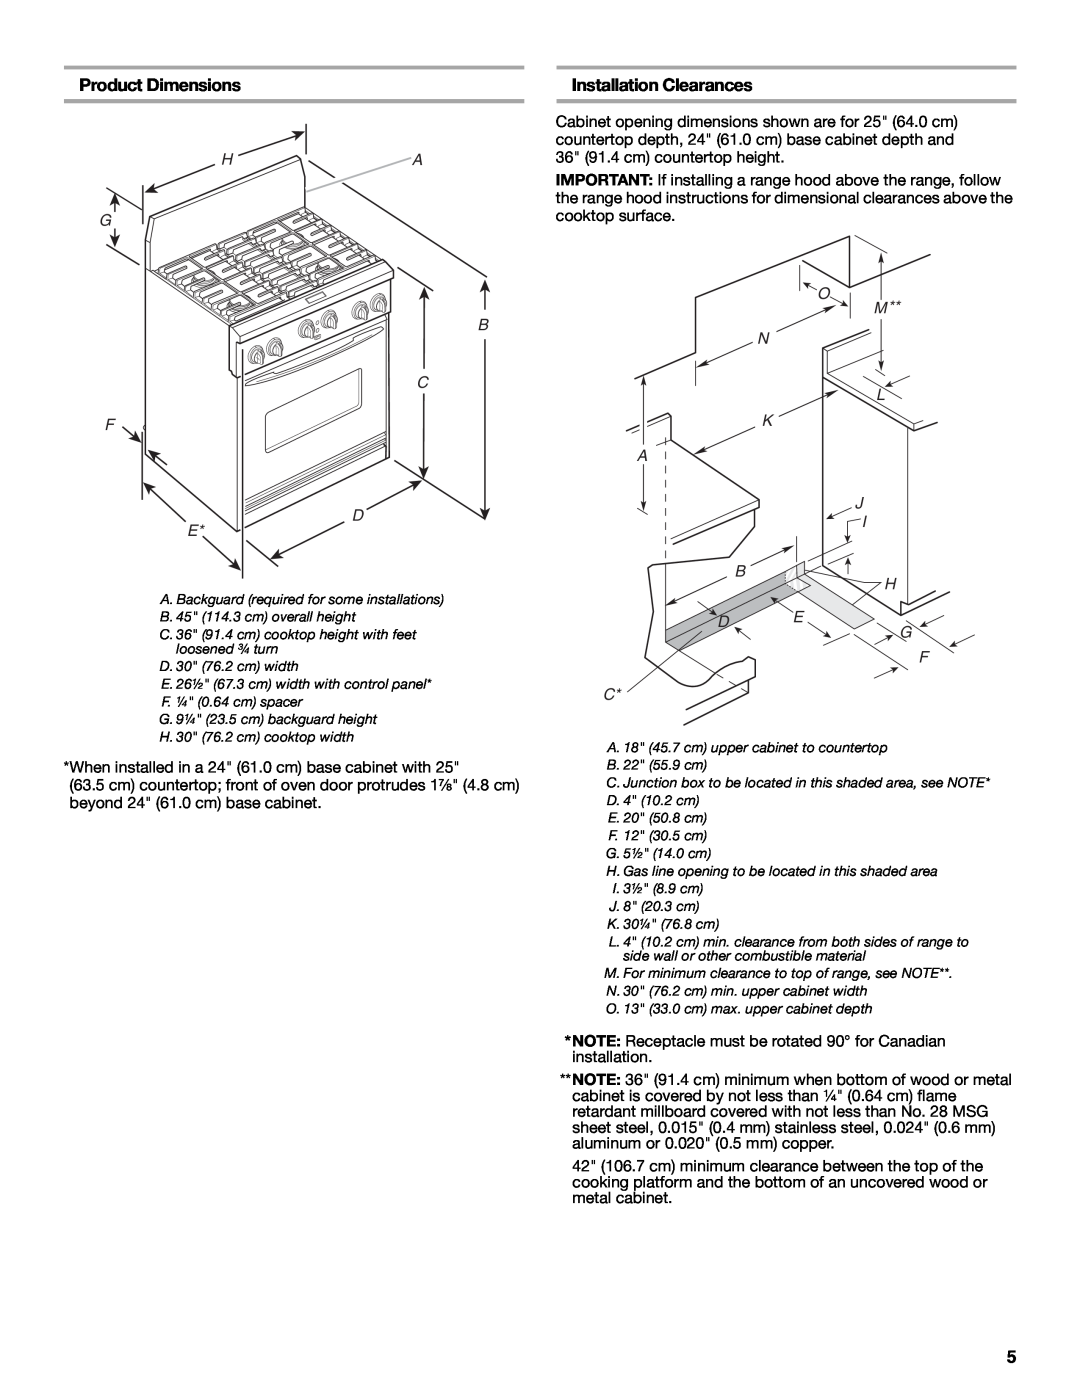 KitchenAid 9759536B Product Dimensions, Installation Clearances, H G F E, A B C D, O M N L K A J I B H, D E C 